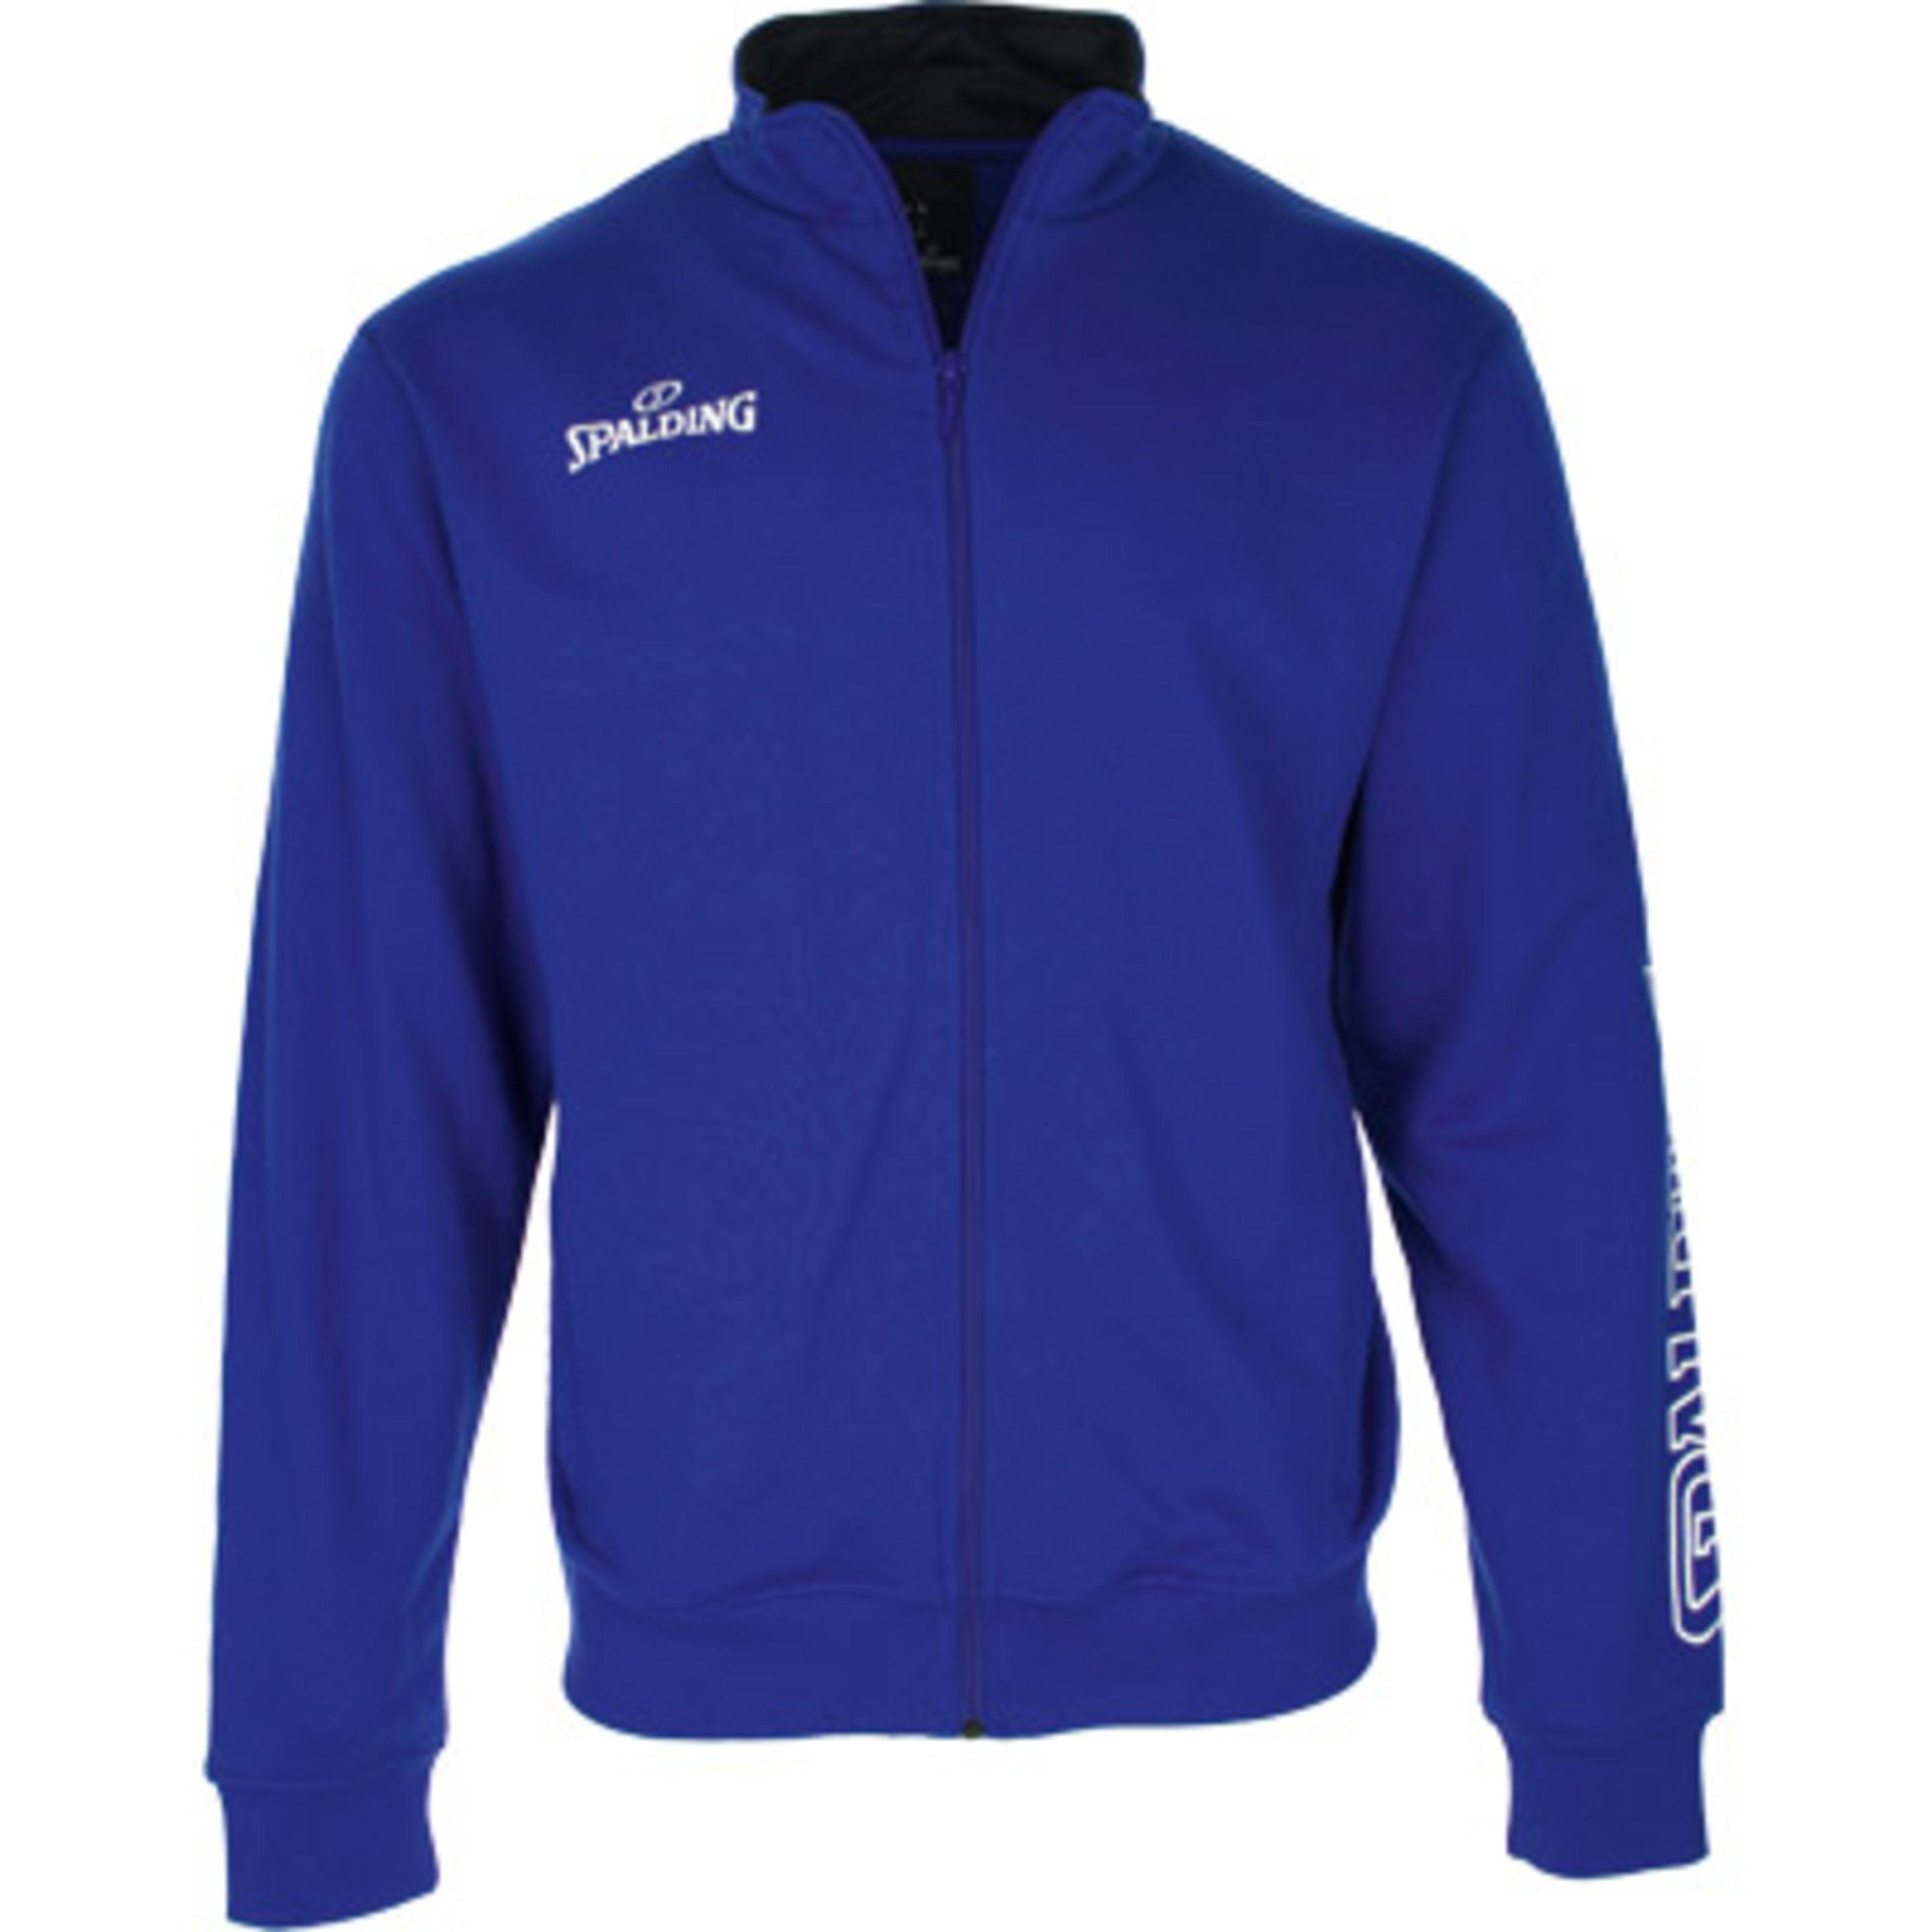 Team Ii Zipper Jacket Azul Royal Spalding